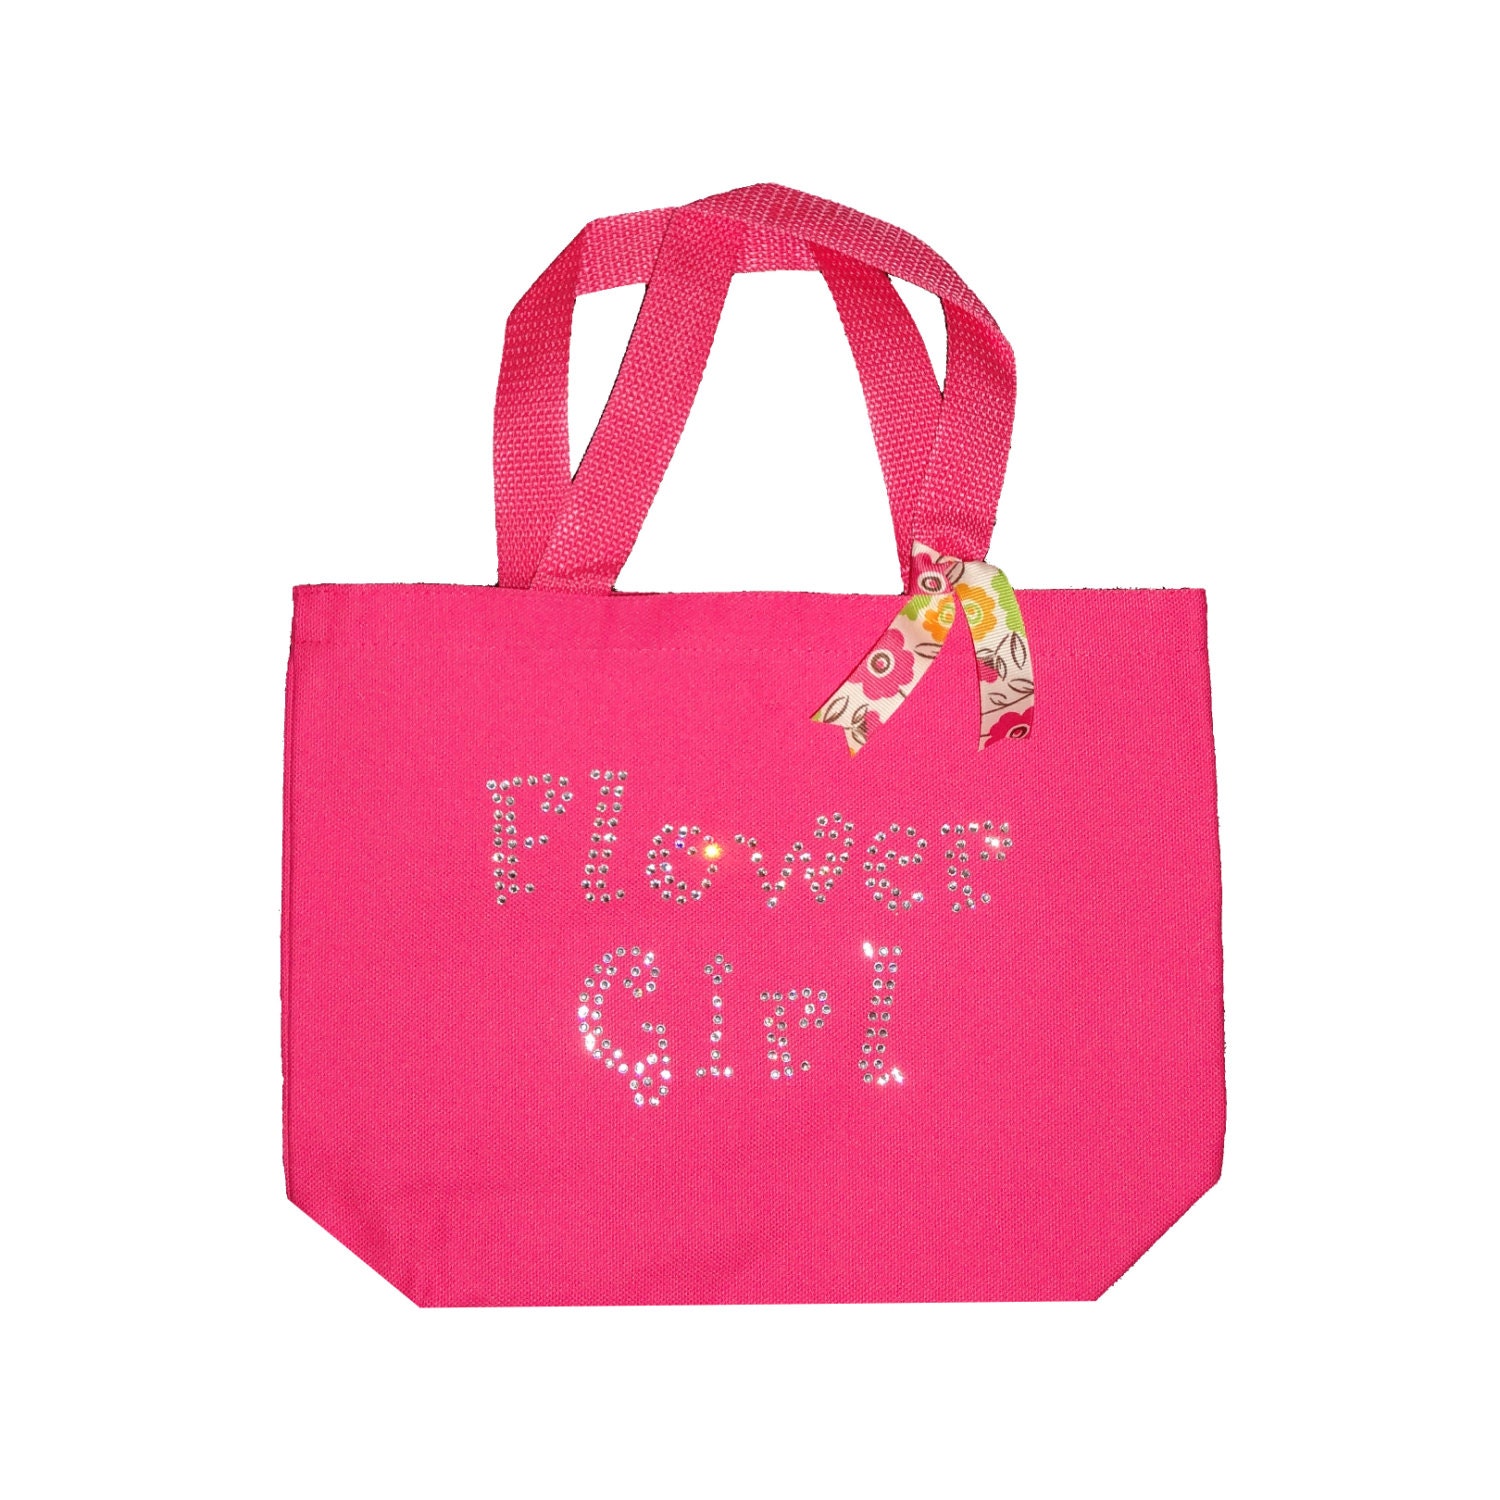 FLOWER GIRL personalized rhinestone tote gift bag